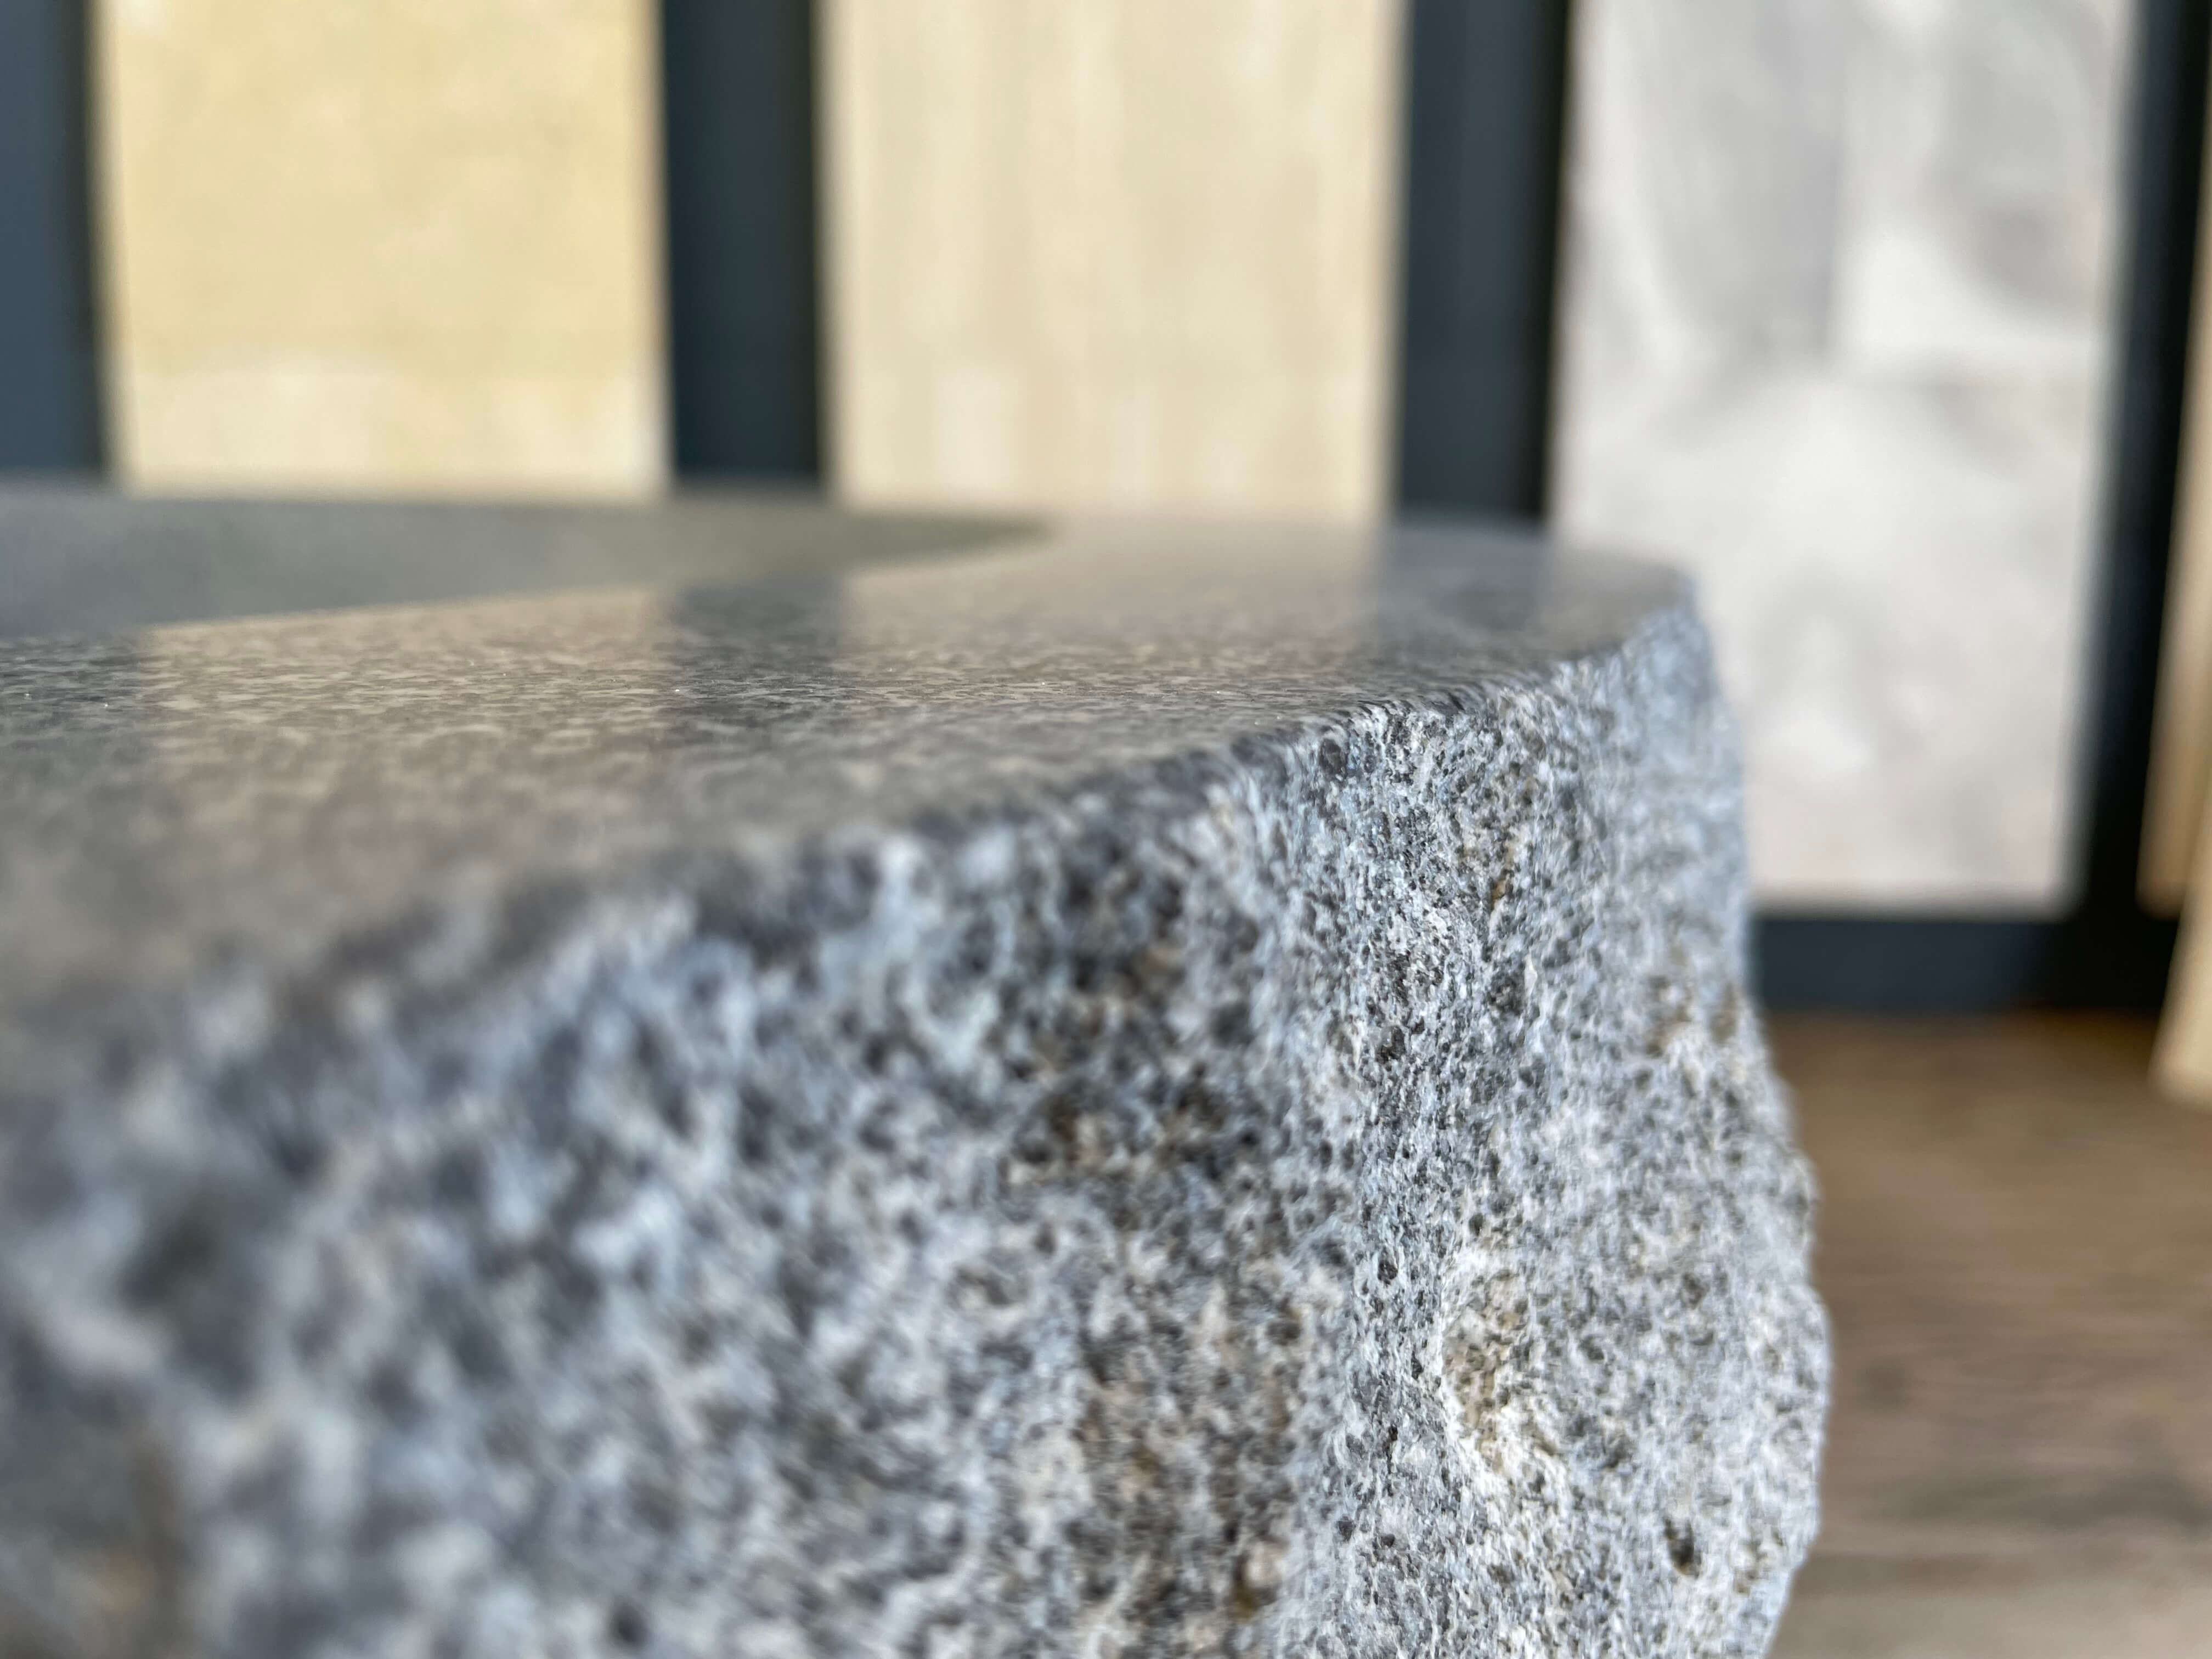 Granite-Bathtub-CHARCOAL GREY Granite honed/filled Oval-in - Stone Supplier - Rocks in Stock